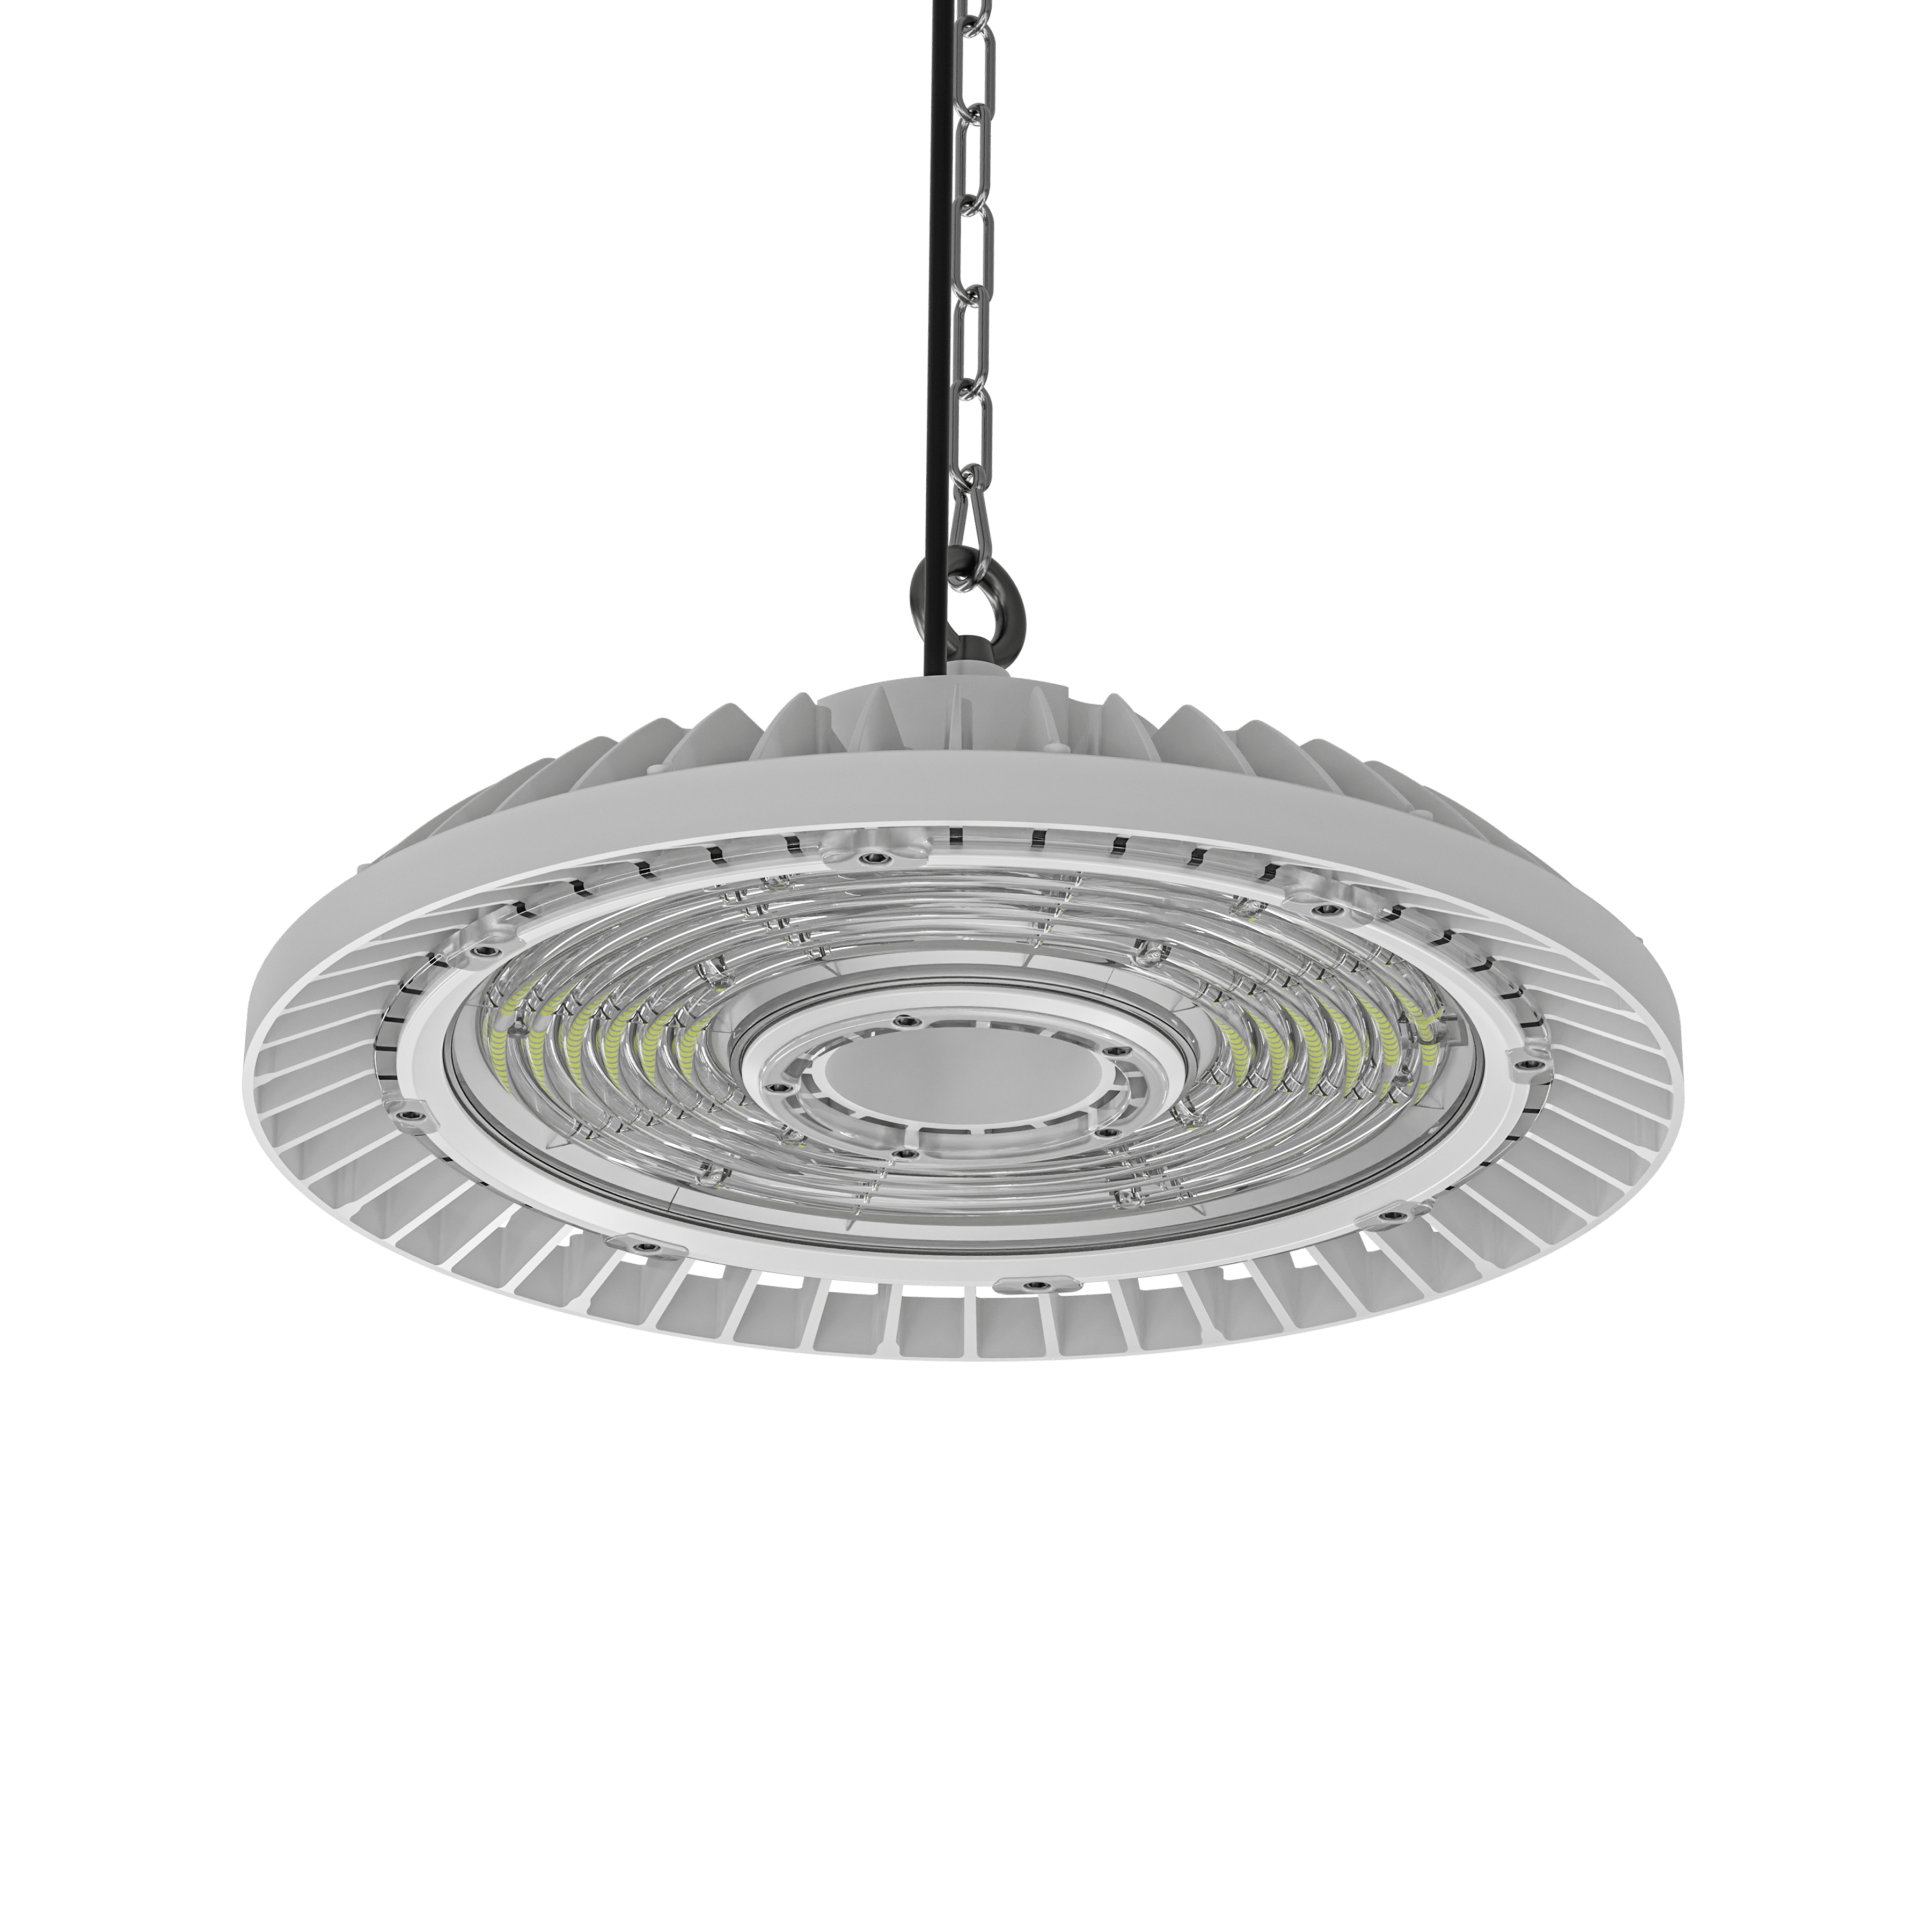 welight intelligent | LHS 606 MultiPower LED-Hallenstrahler – Perspektive Detailansicht weiss matt